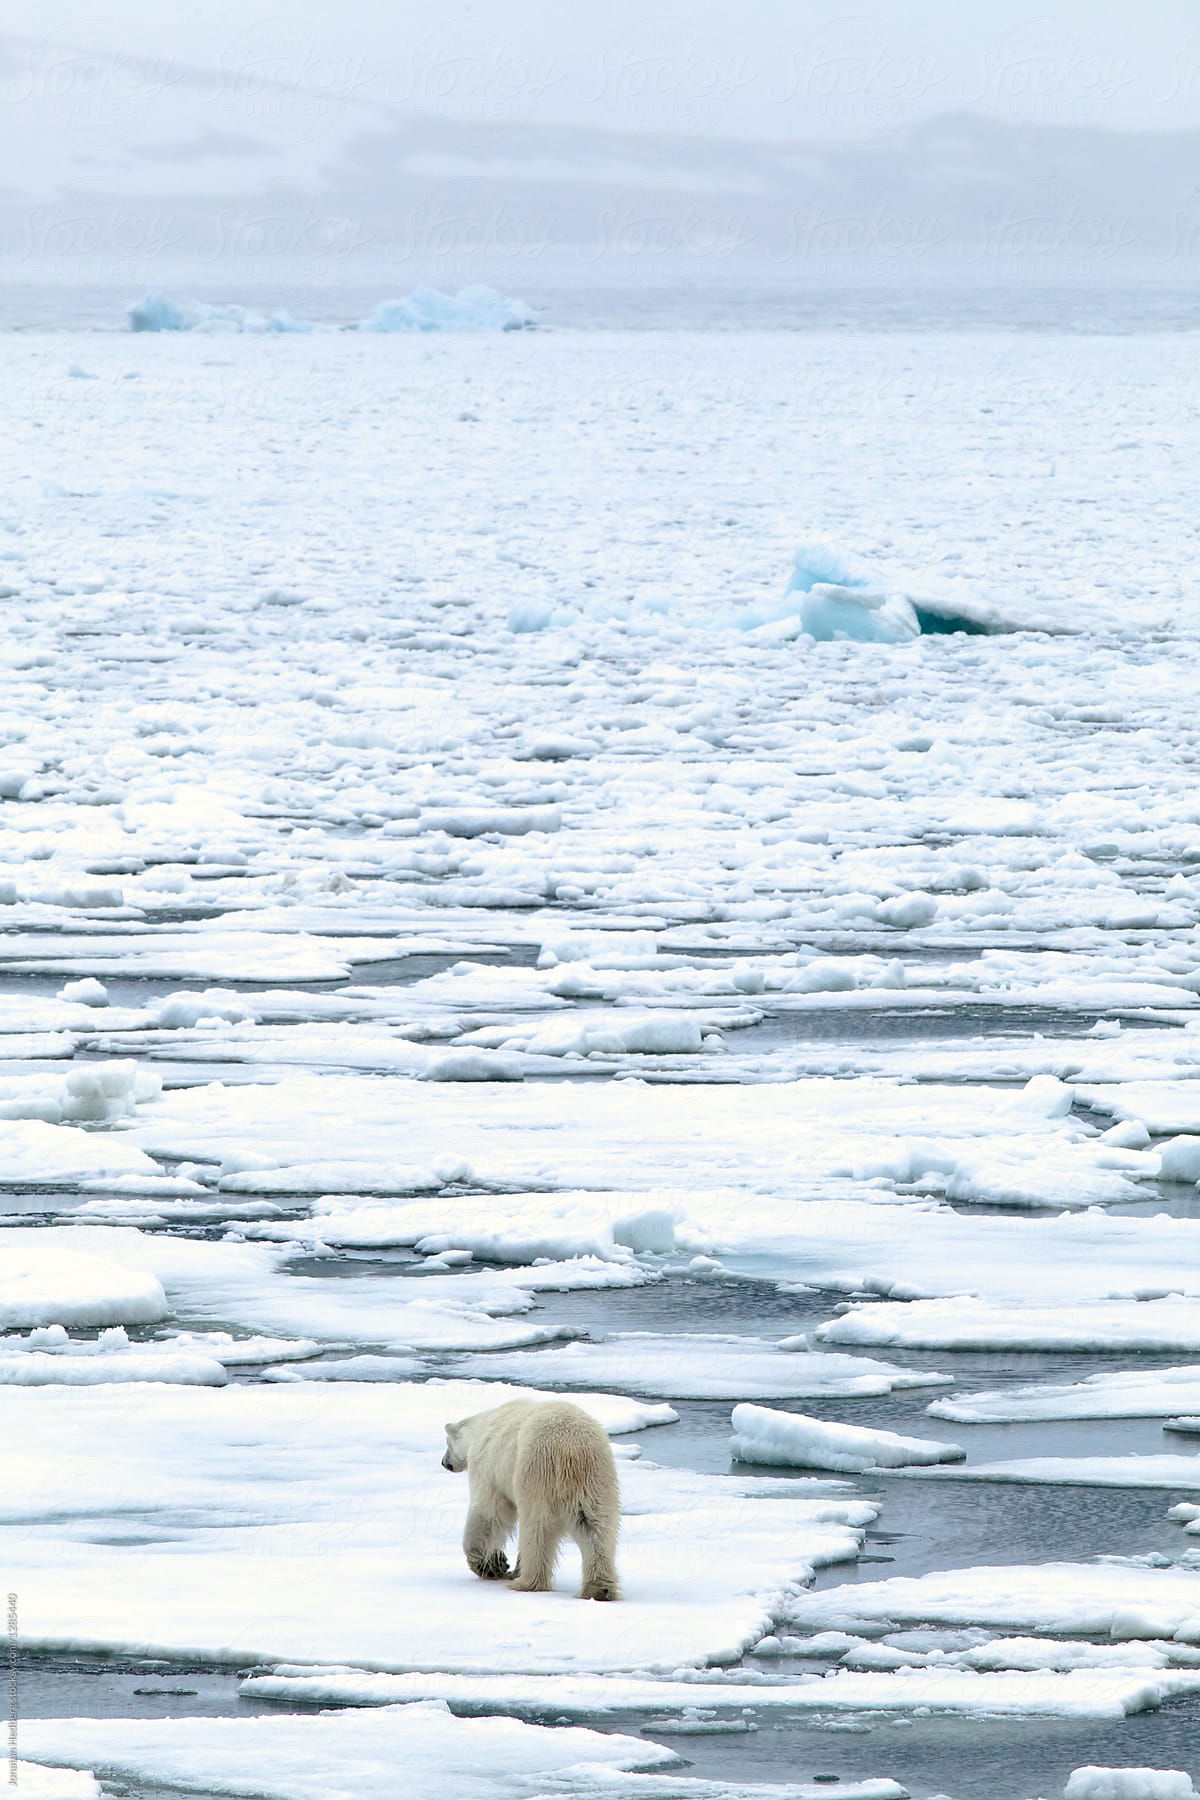 A polar bear walking on the pack ice